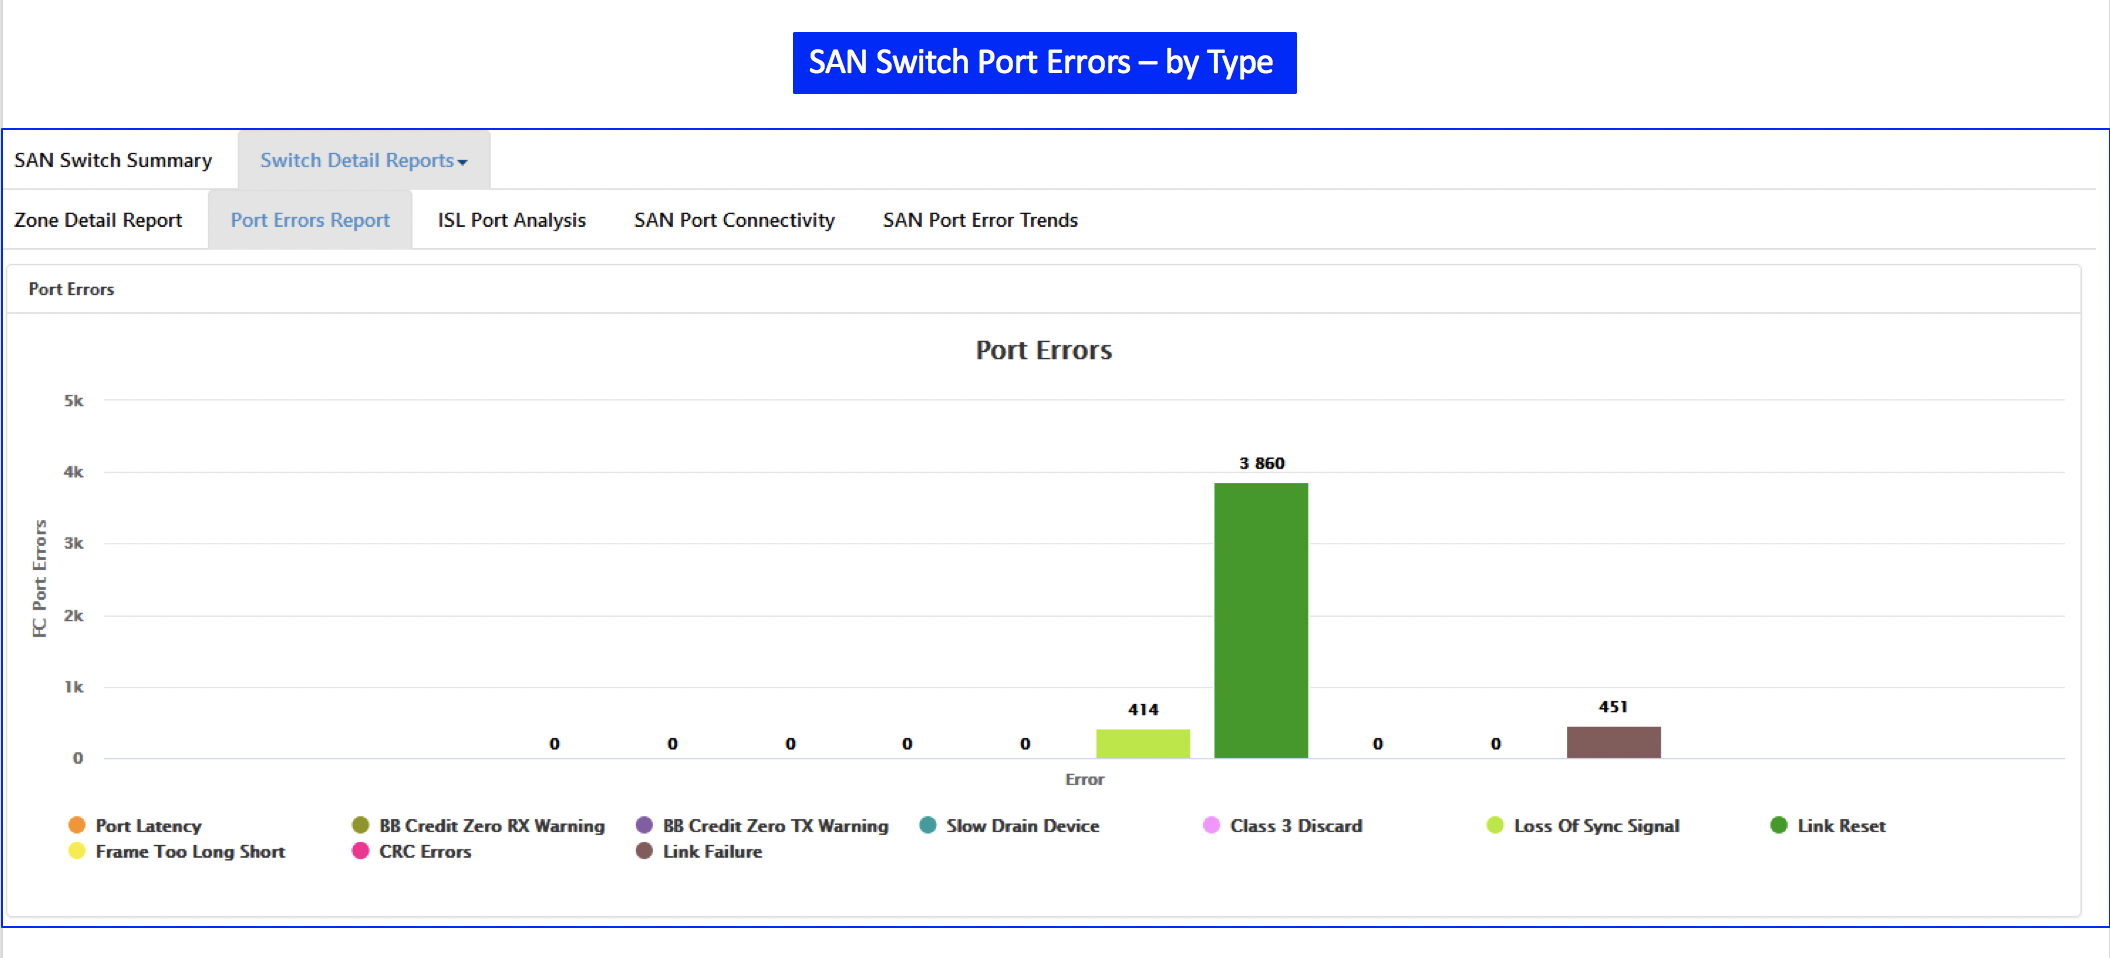 SAN Switch Port Errors